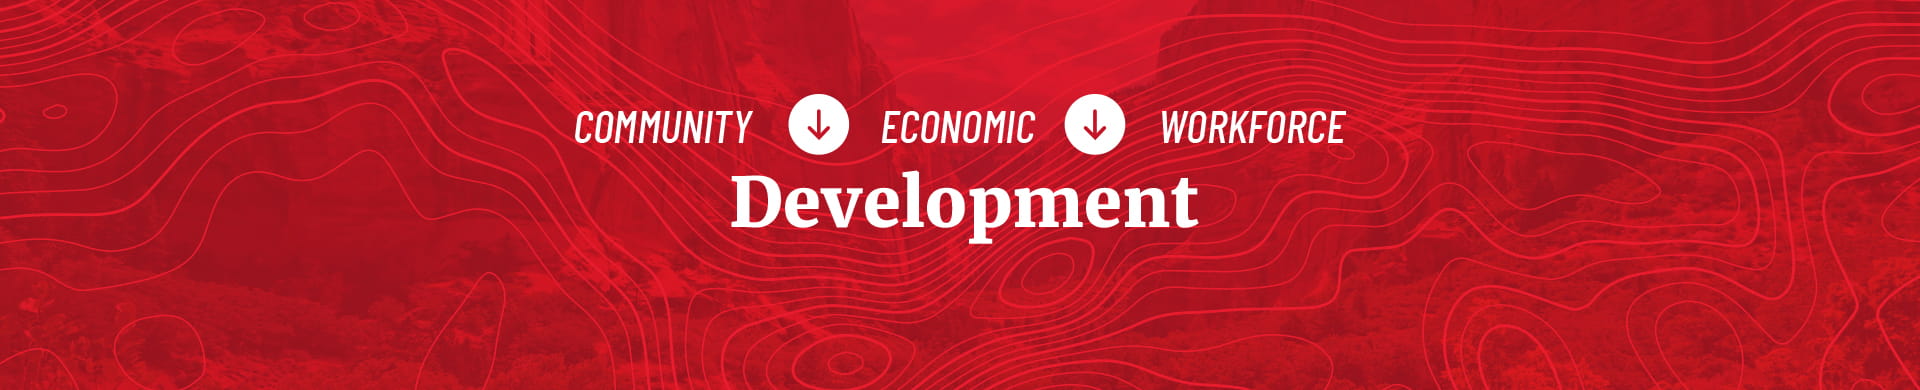 Community - Economic - Workforce - Development